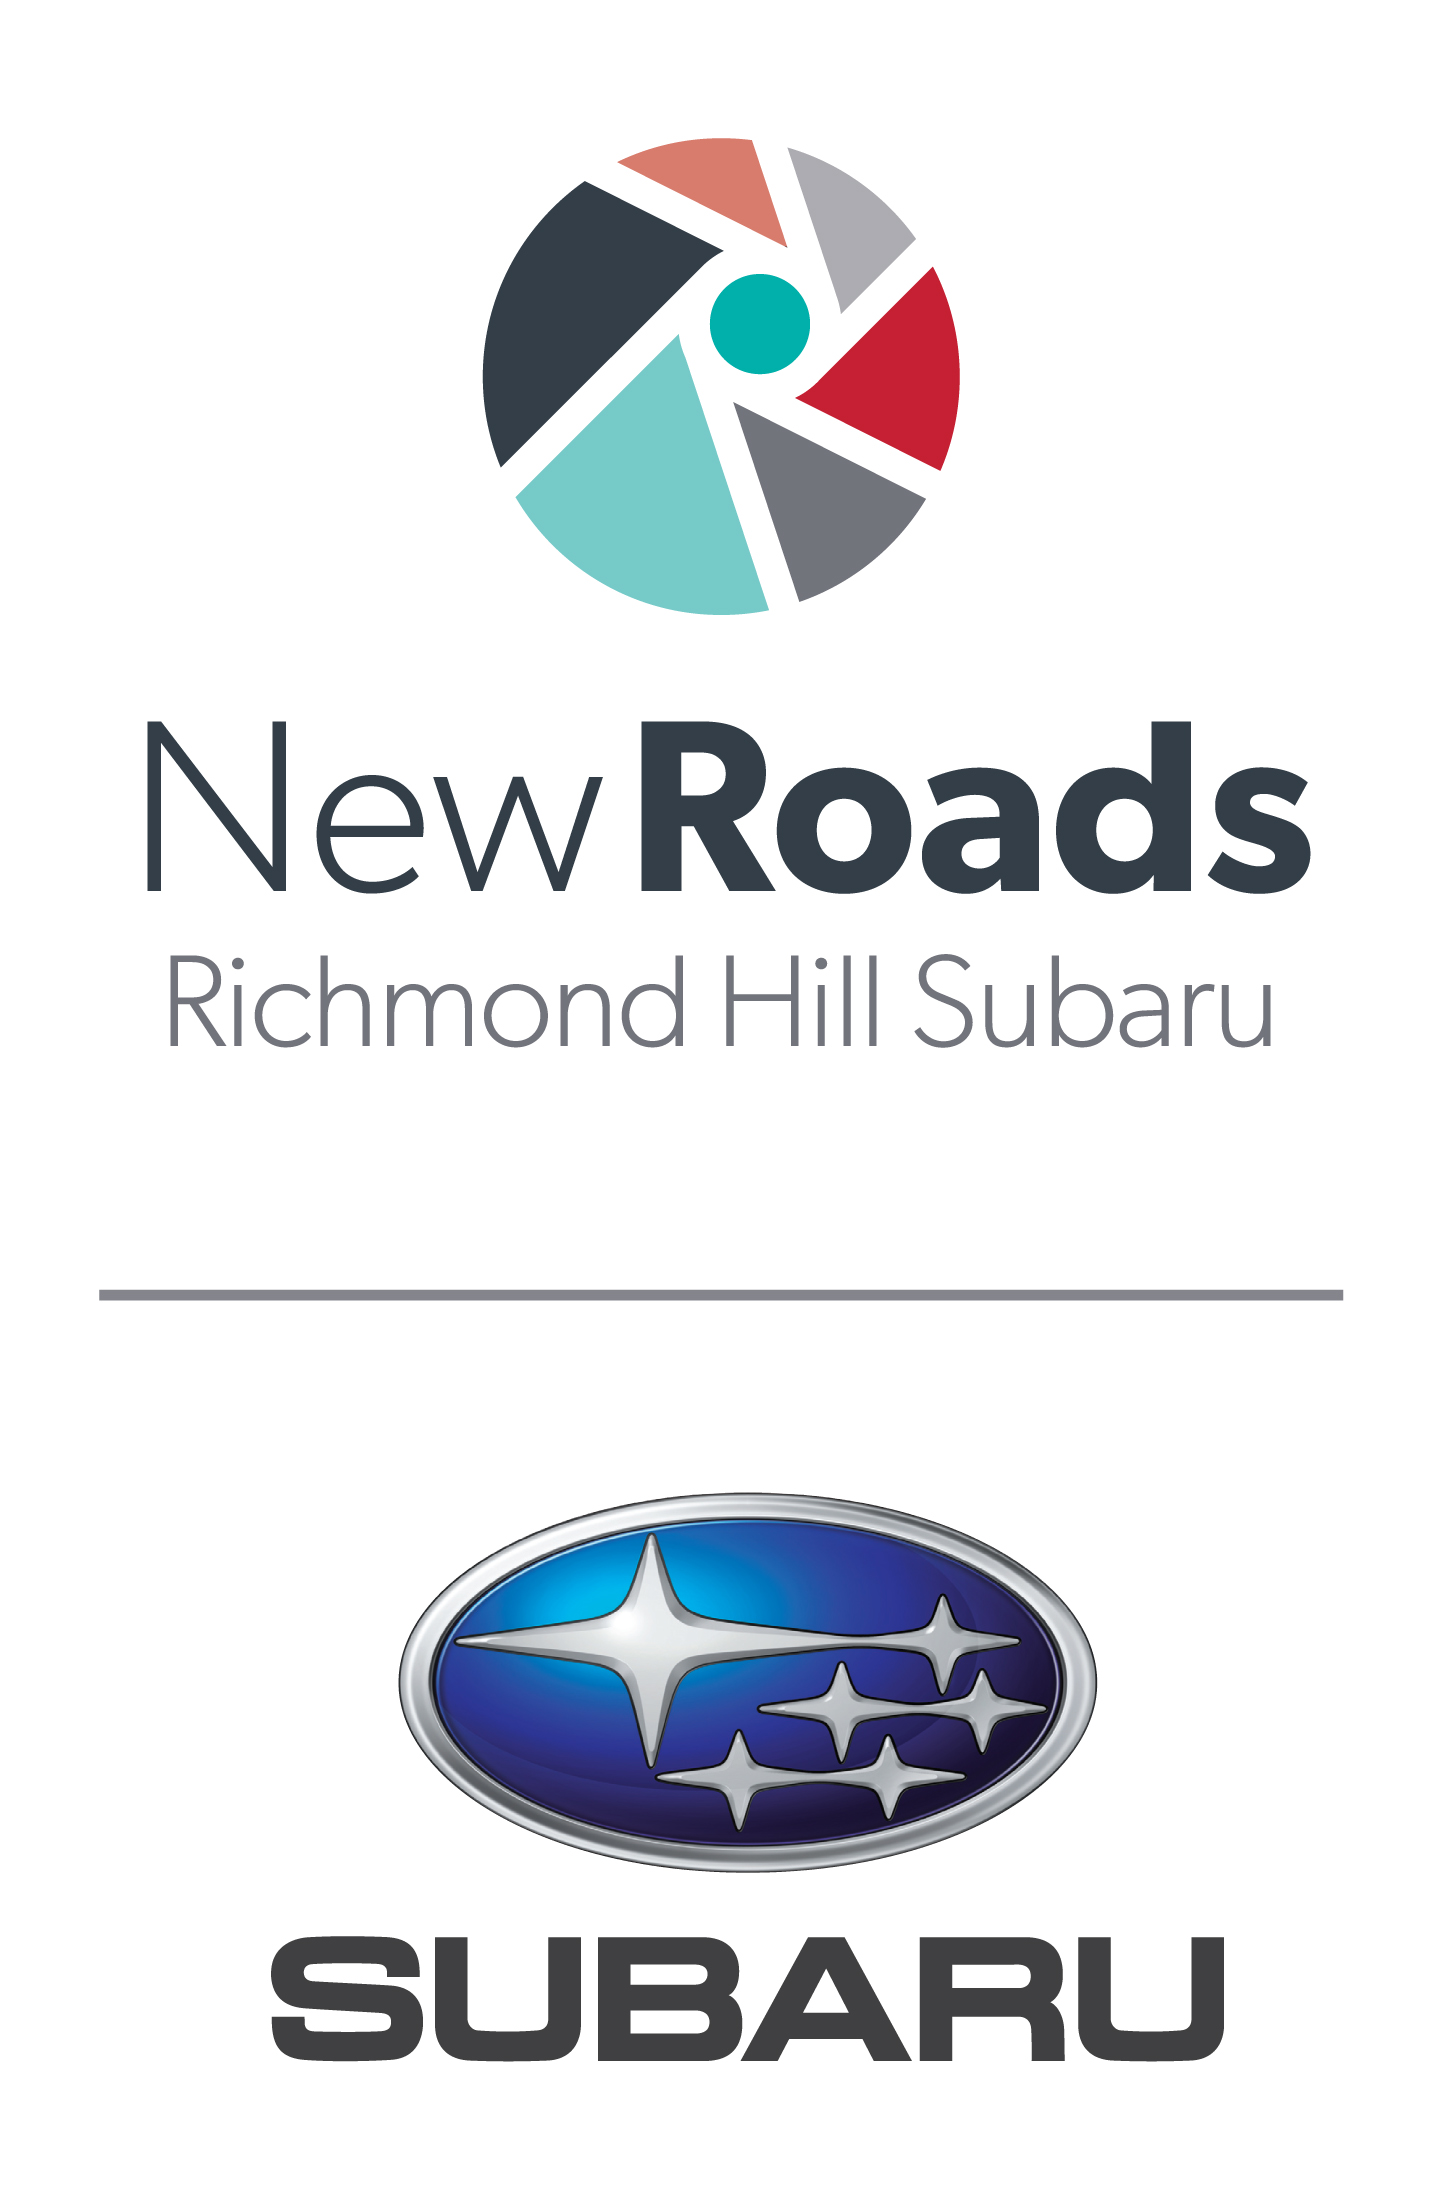 NewRoads Richmond Hill Subaru